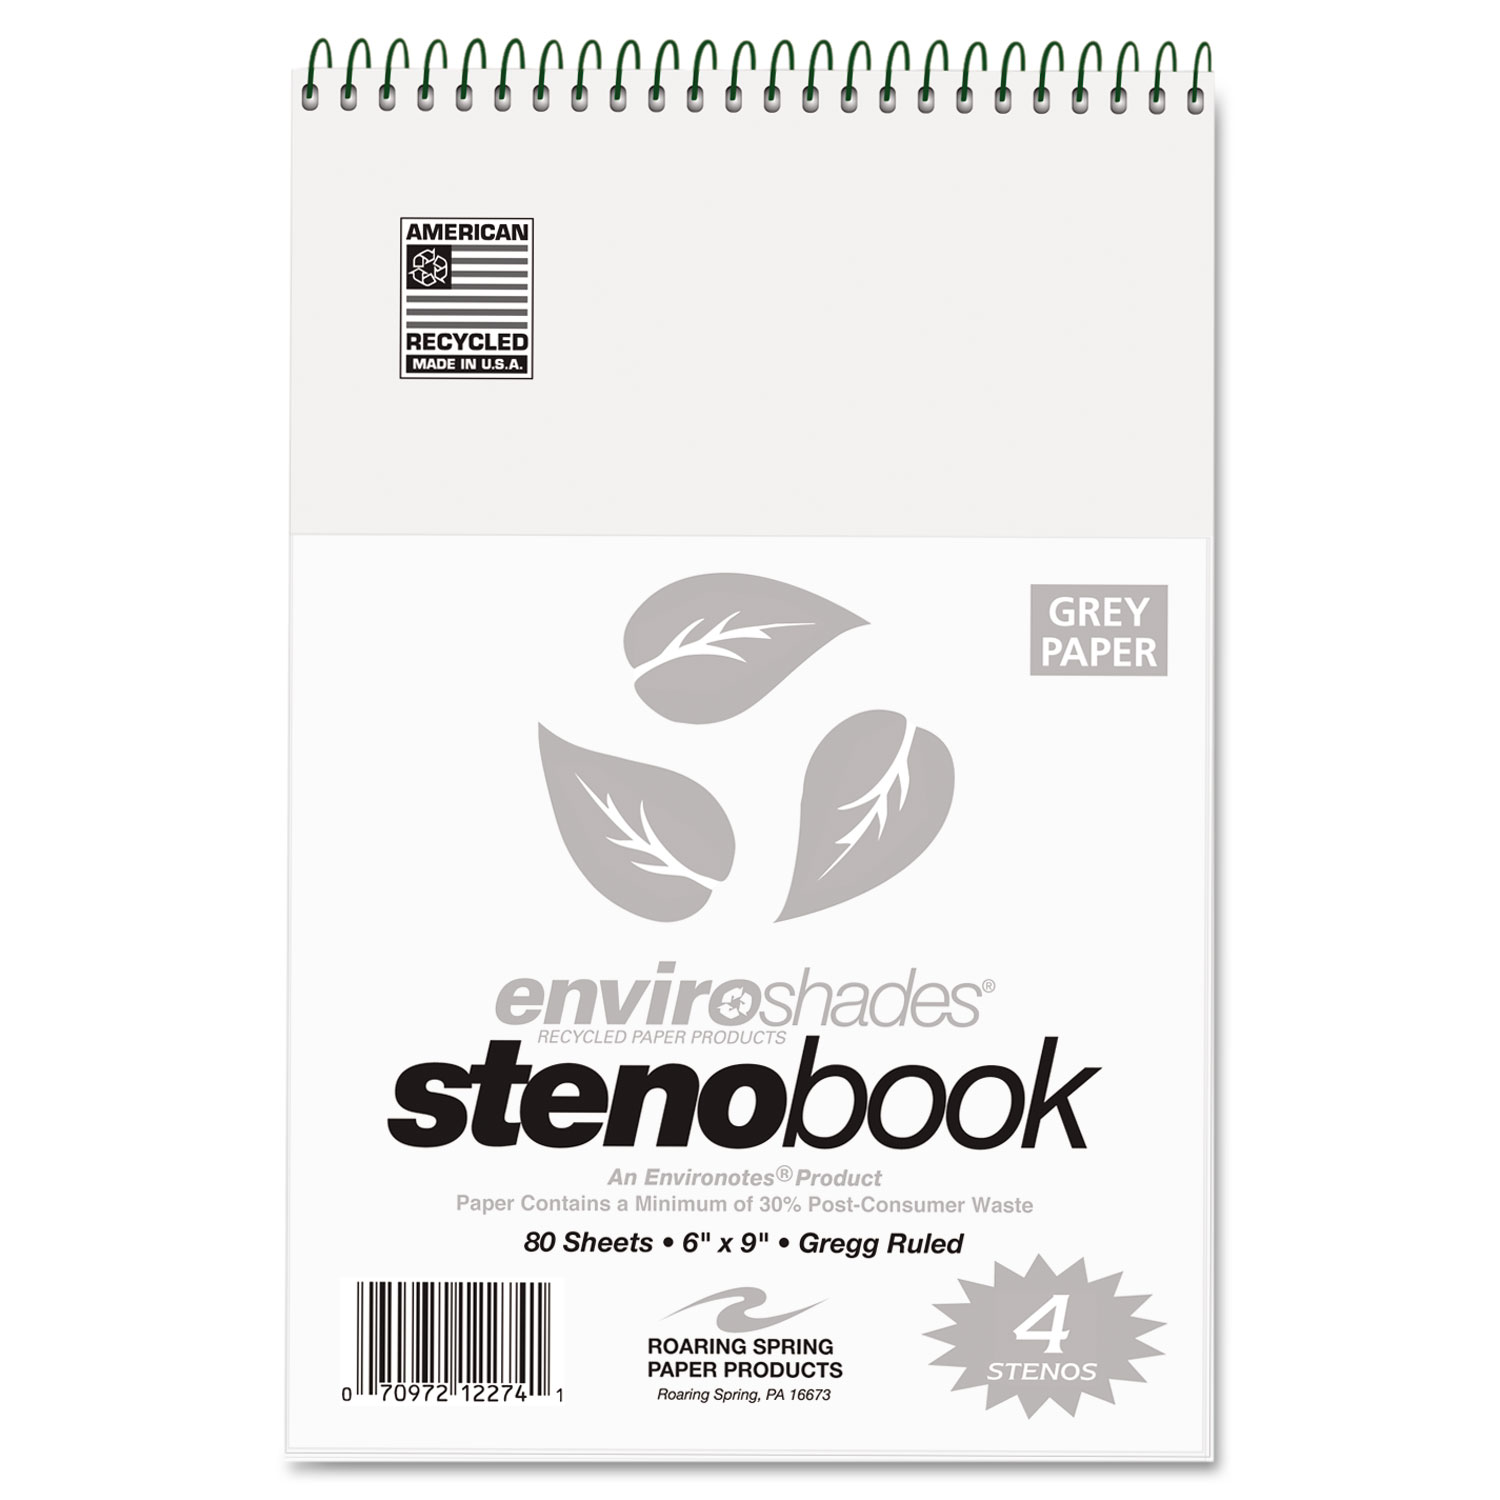  Roaring Spring 12274 Enviroshades Steno Notebook, Gregg Rule, 6 x 9, Gray, 80 Sheets, 4/Pack (ROA12274) 